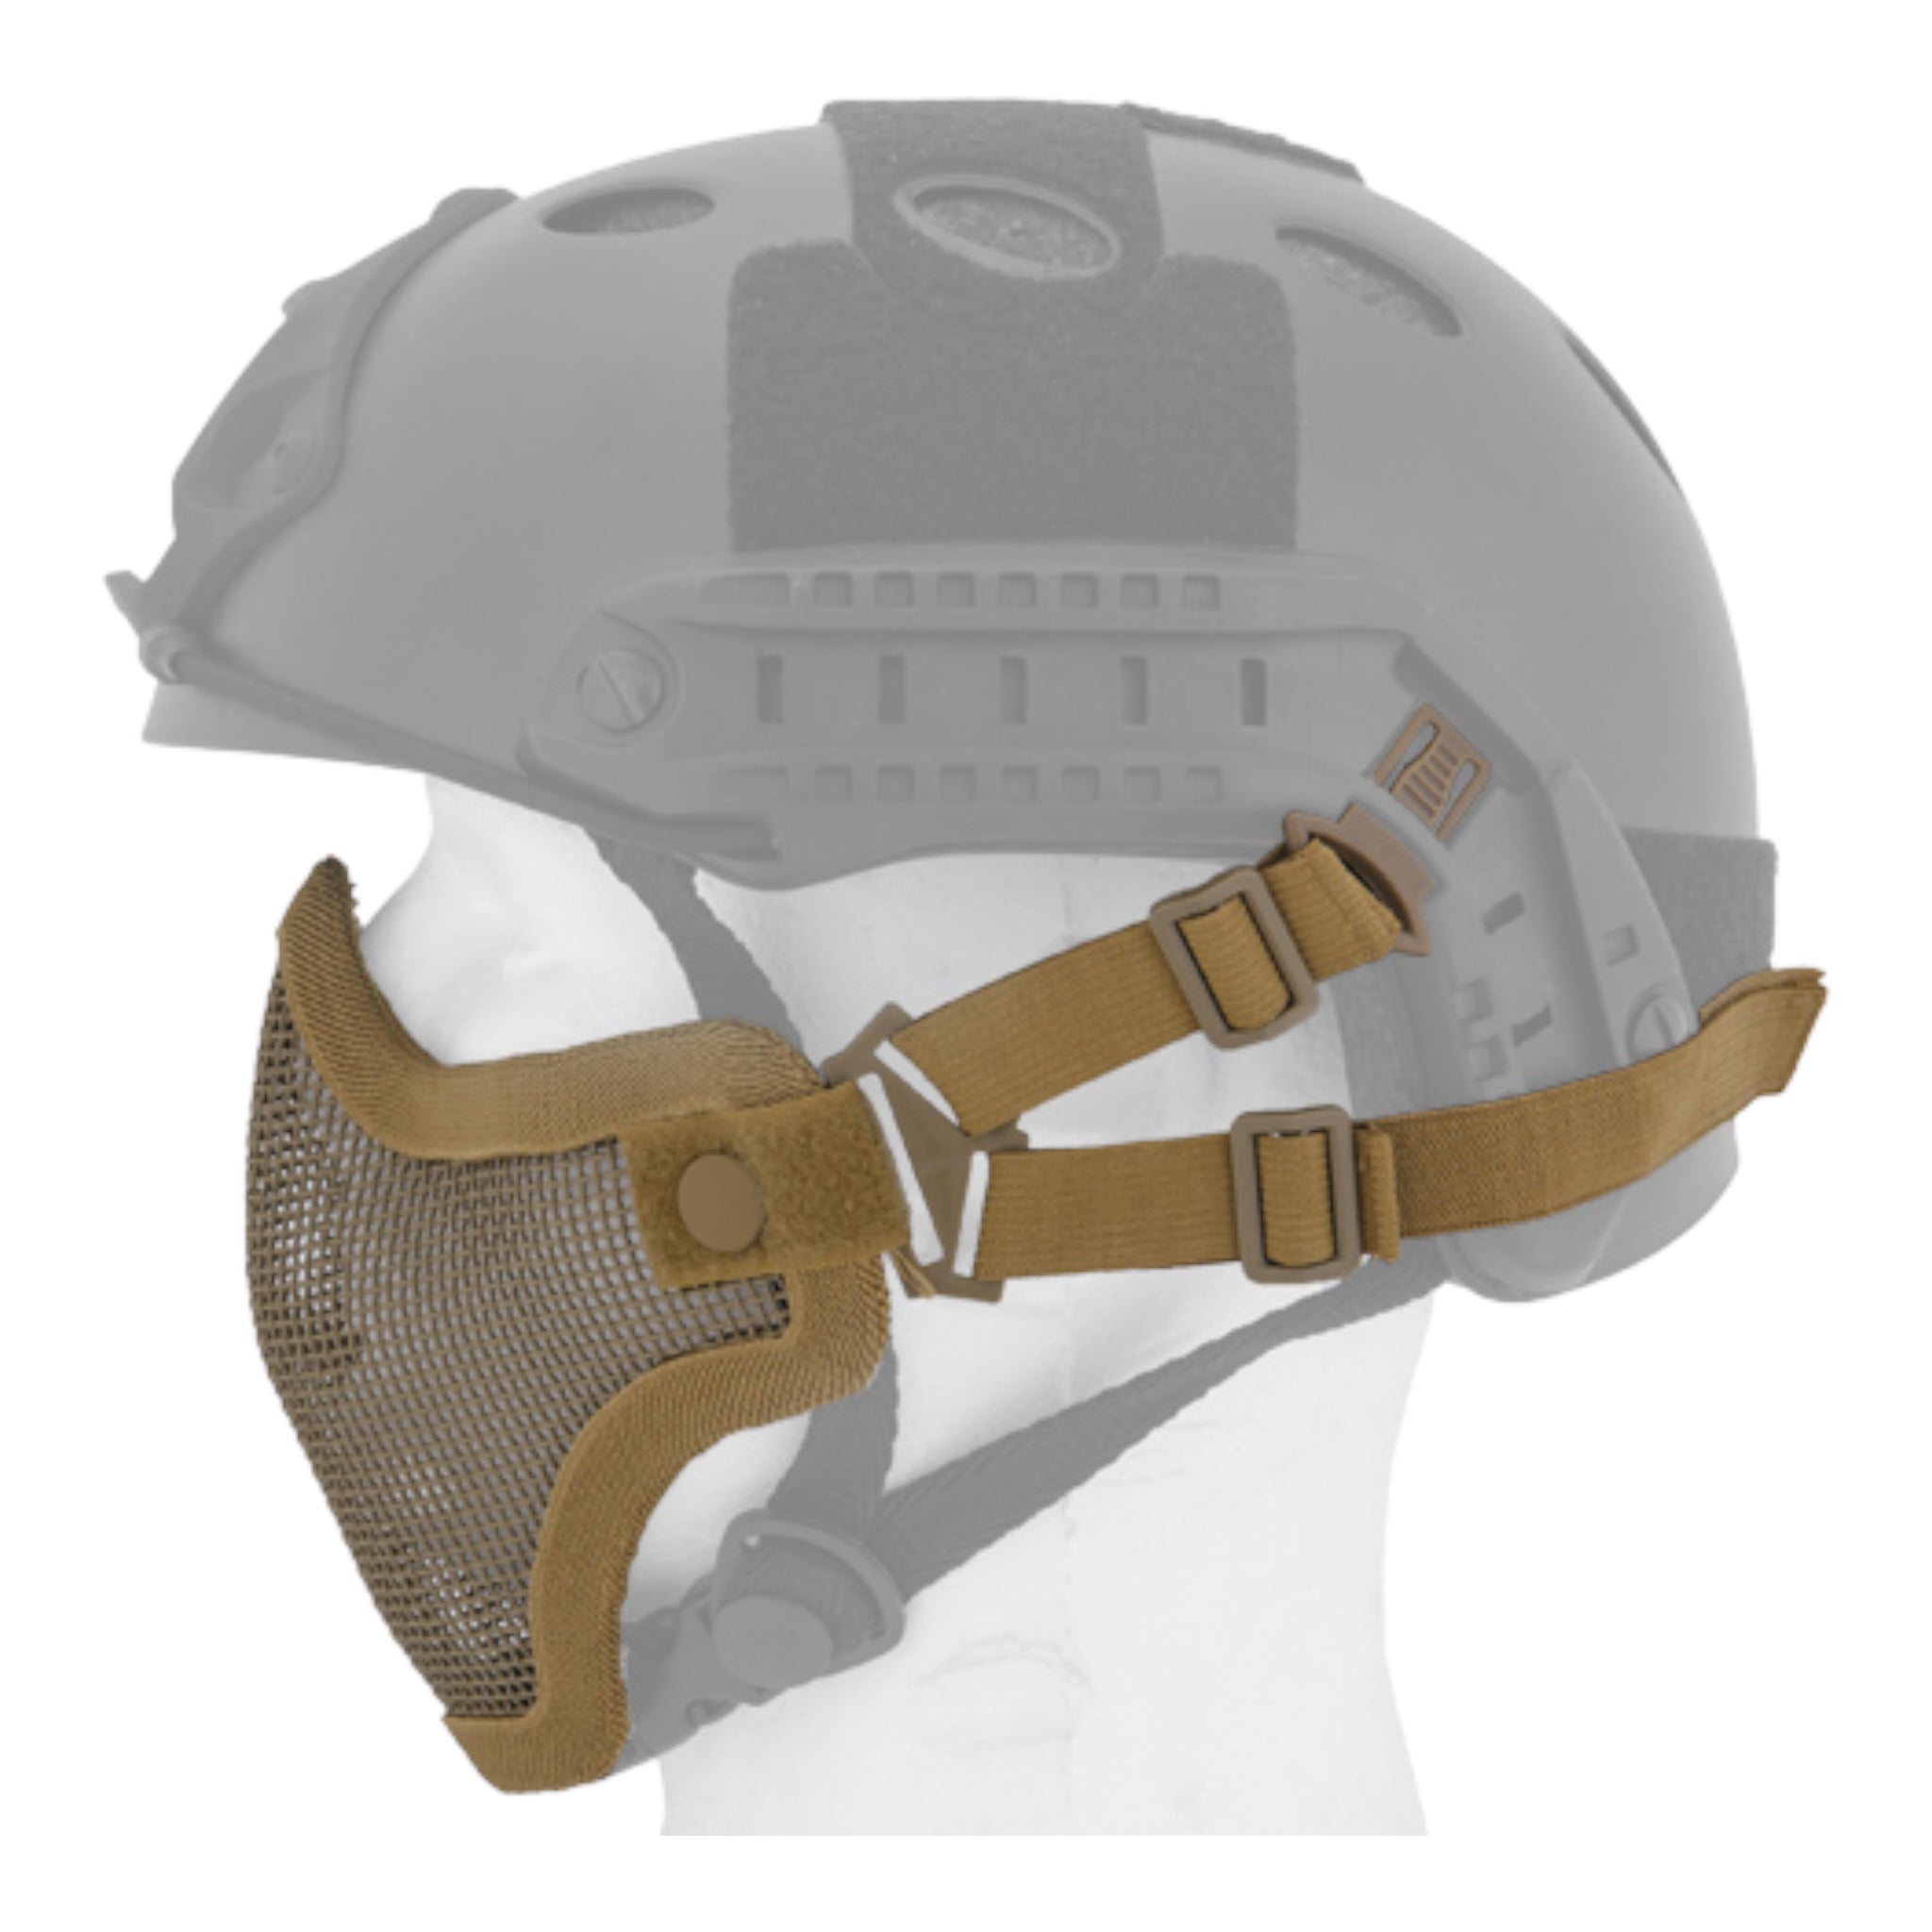 Lancer Tactical Metal Mesh Half Mask w/ Helmet Side Rail Attachment - ssairsoft.com